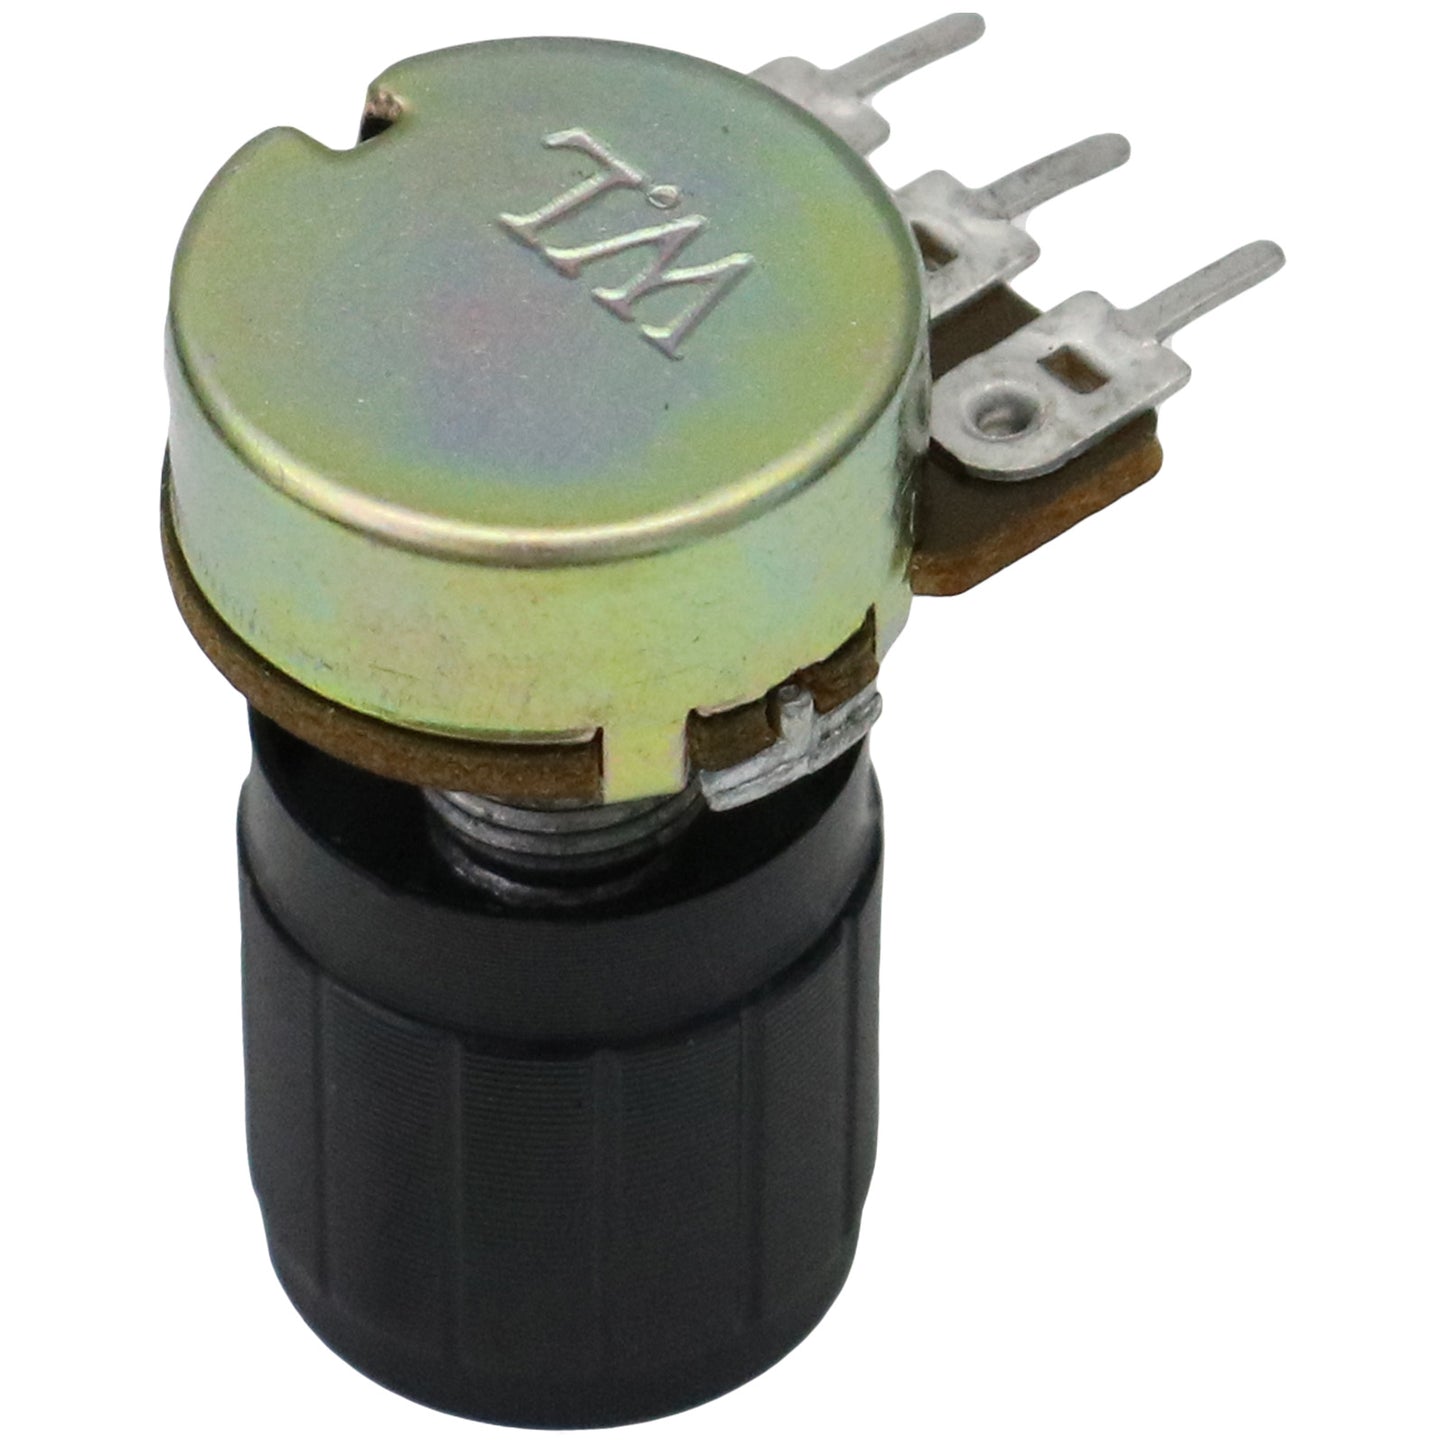 Black Aluminium Shell Amplifier / HiFi Control Knob